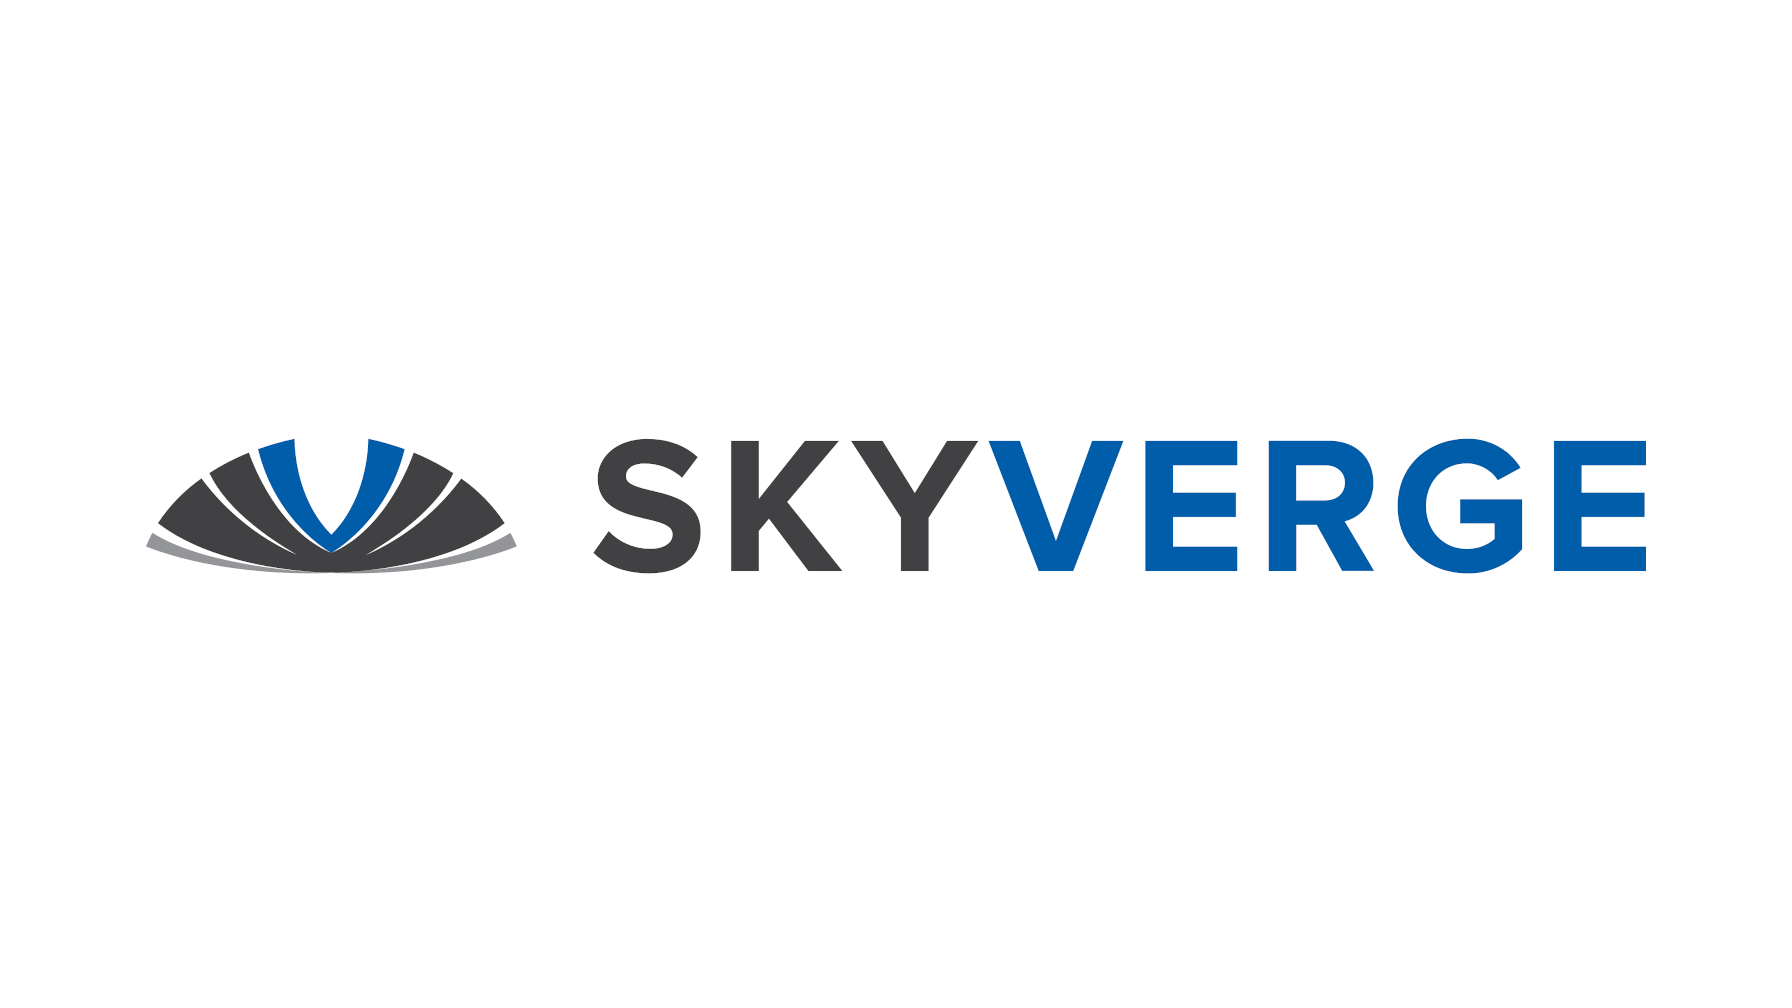 godaddy收购了60个woocommerce附加组件的skyverge创建者GoDaddy收购了60多个WooCommerce附加组件的创建者SkyVerge